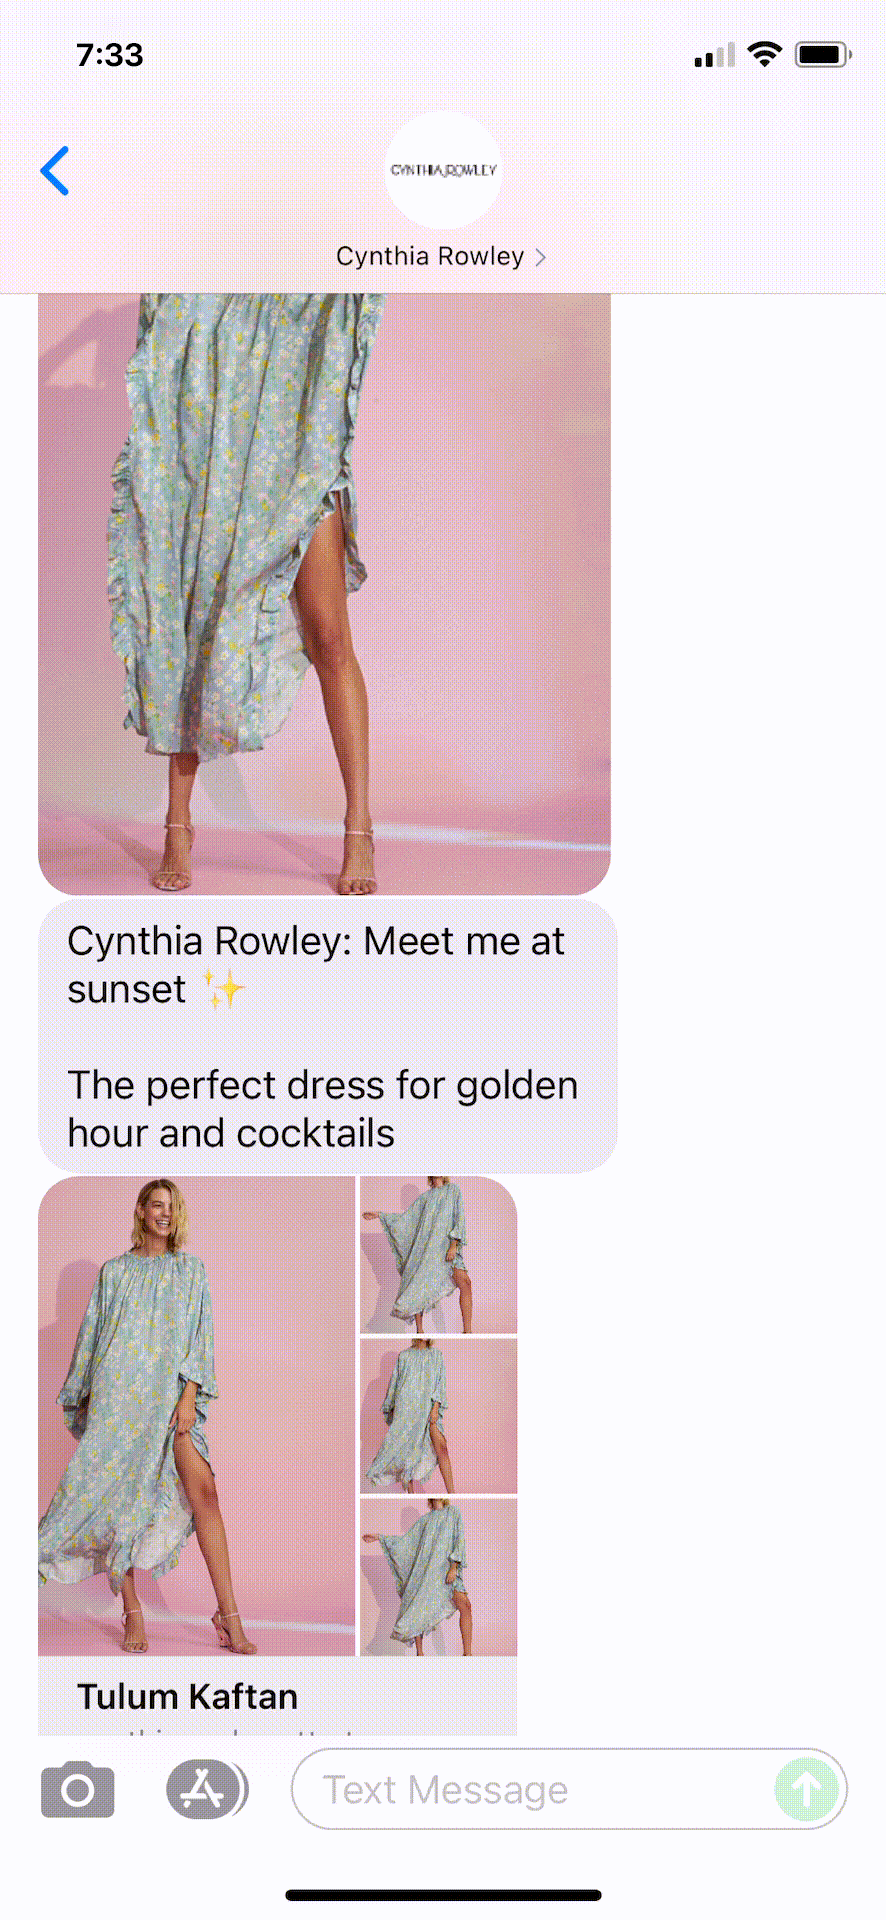 Cynthia-Rowley-Text-Message-Marketing-Example-08.16.2021